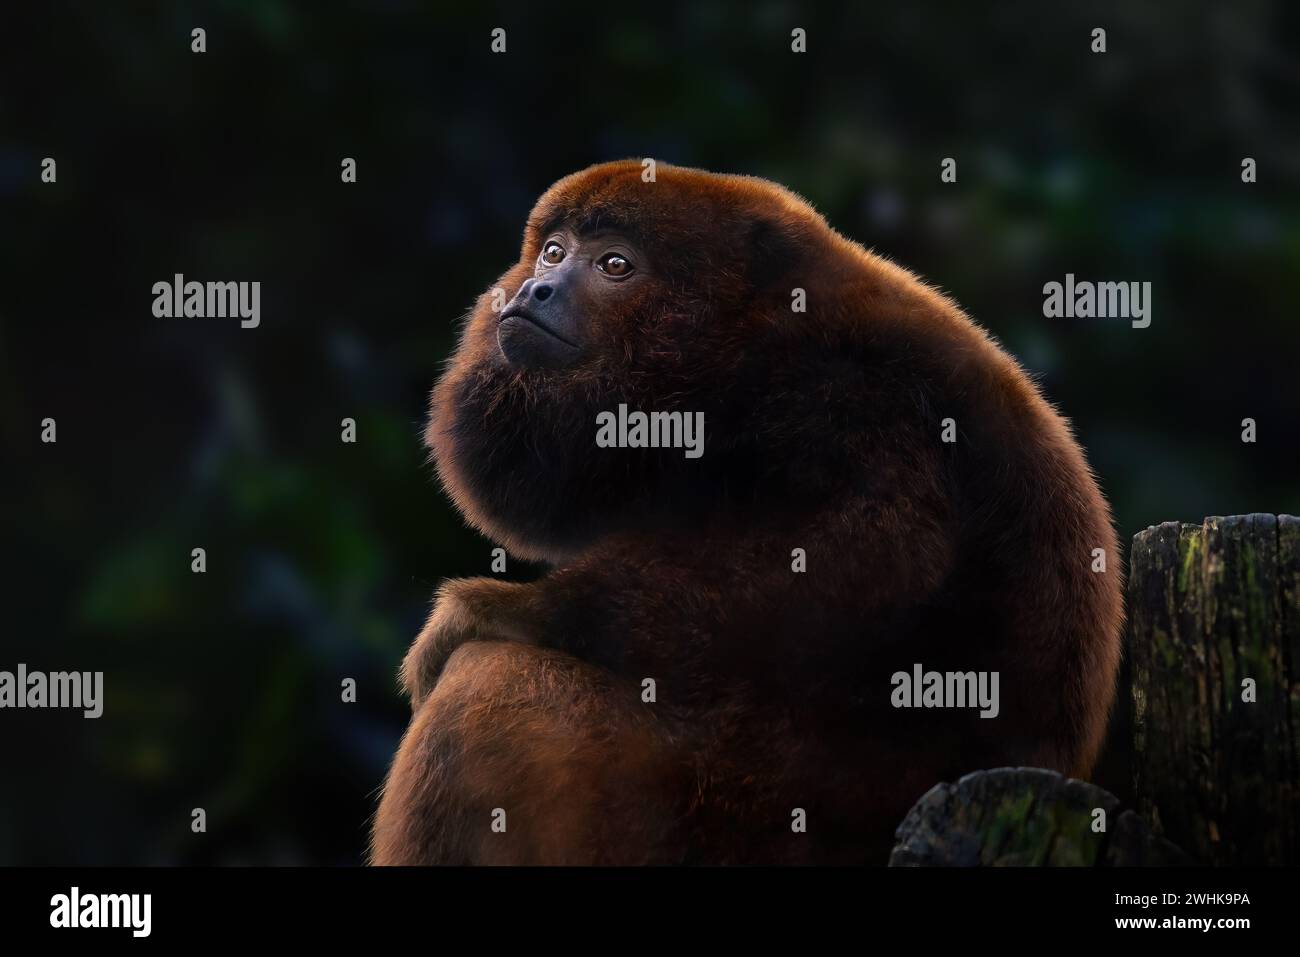 Brown Howler Monkey (Alouatta guariba) Stock Photo